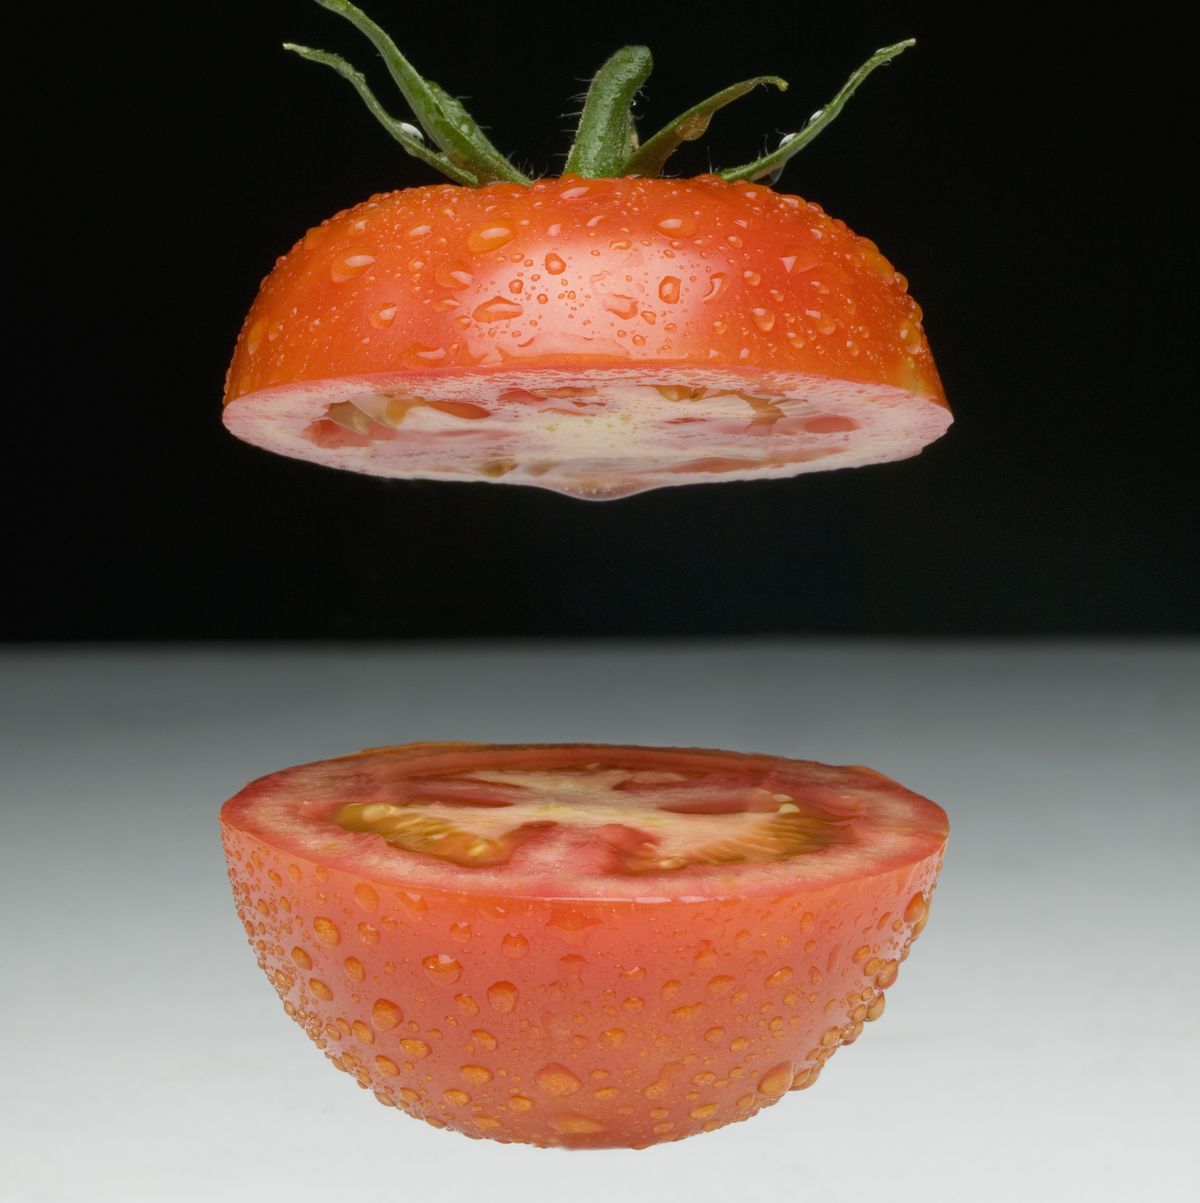 Floating split tomato